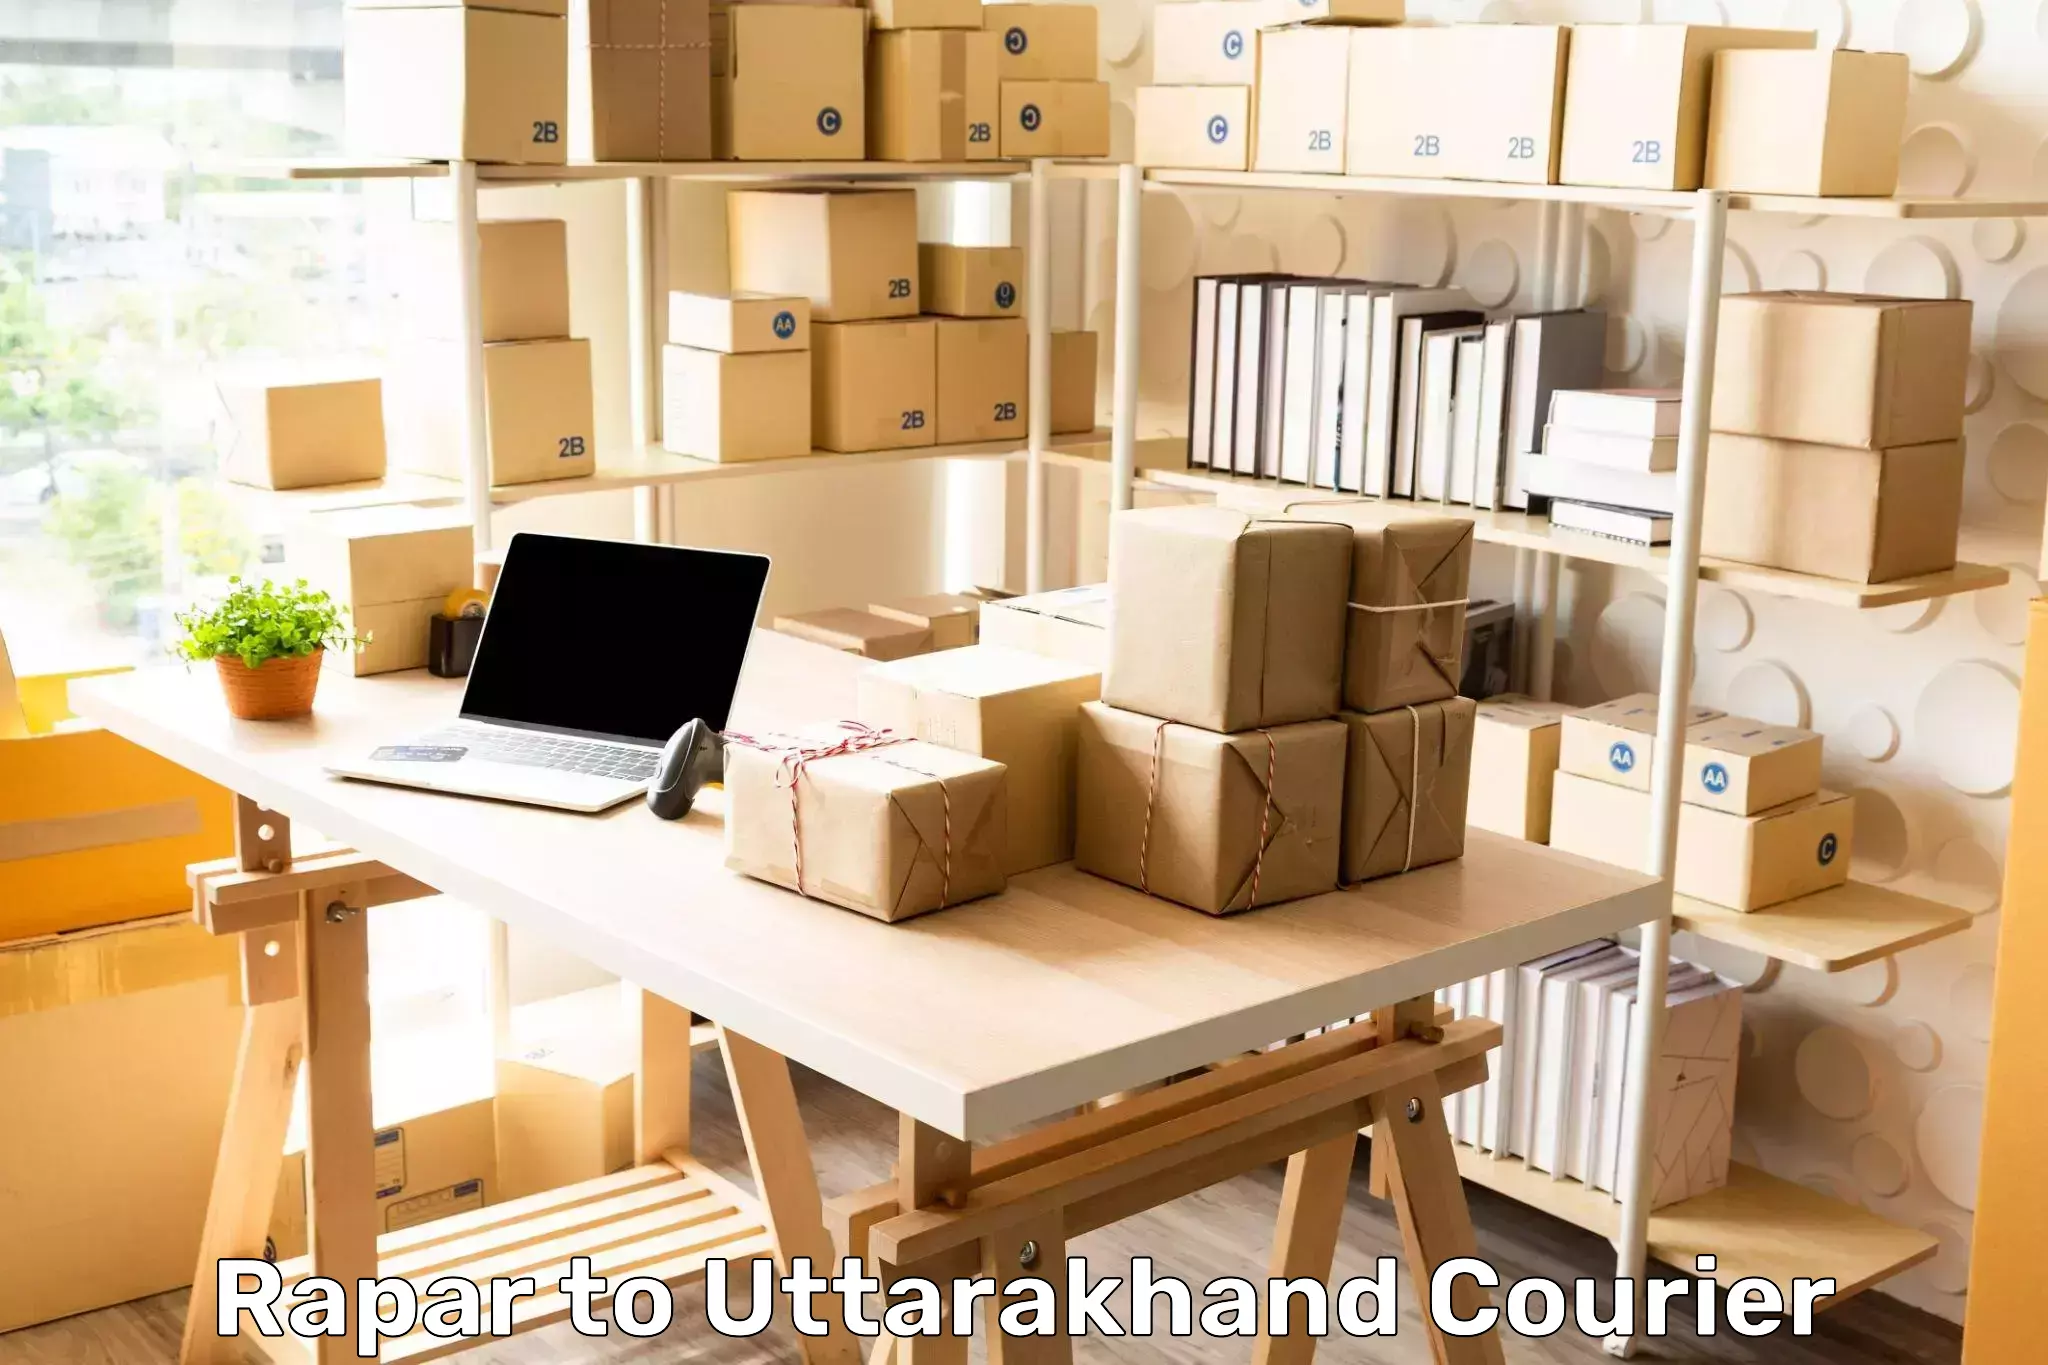 Advanced tracking systems in Rapar to Uttarakhand